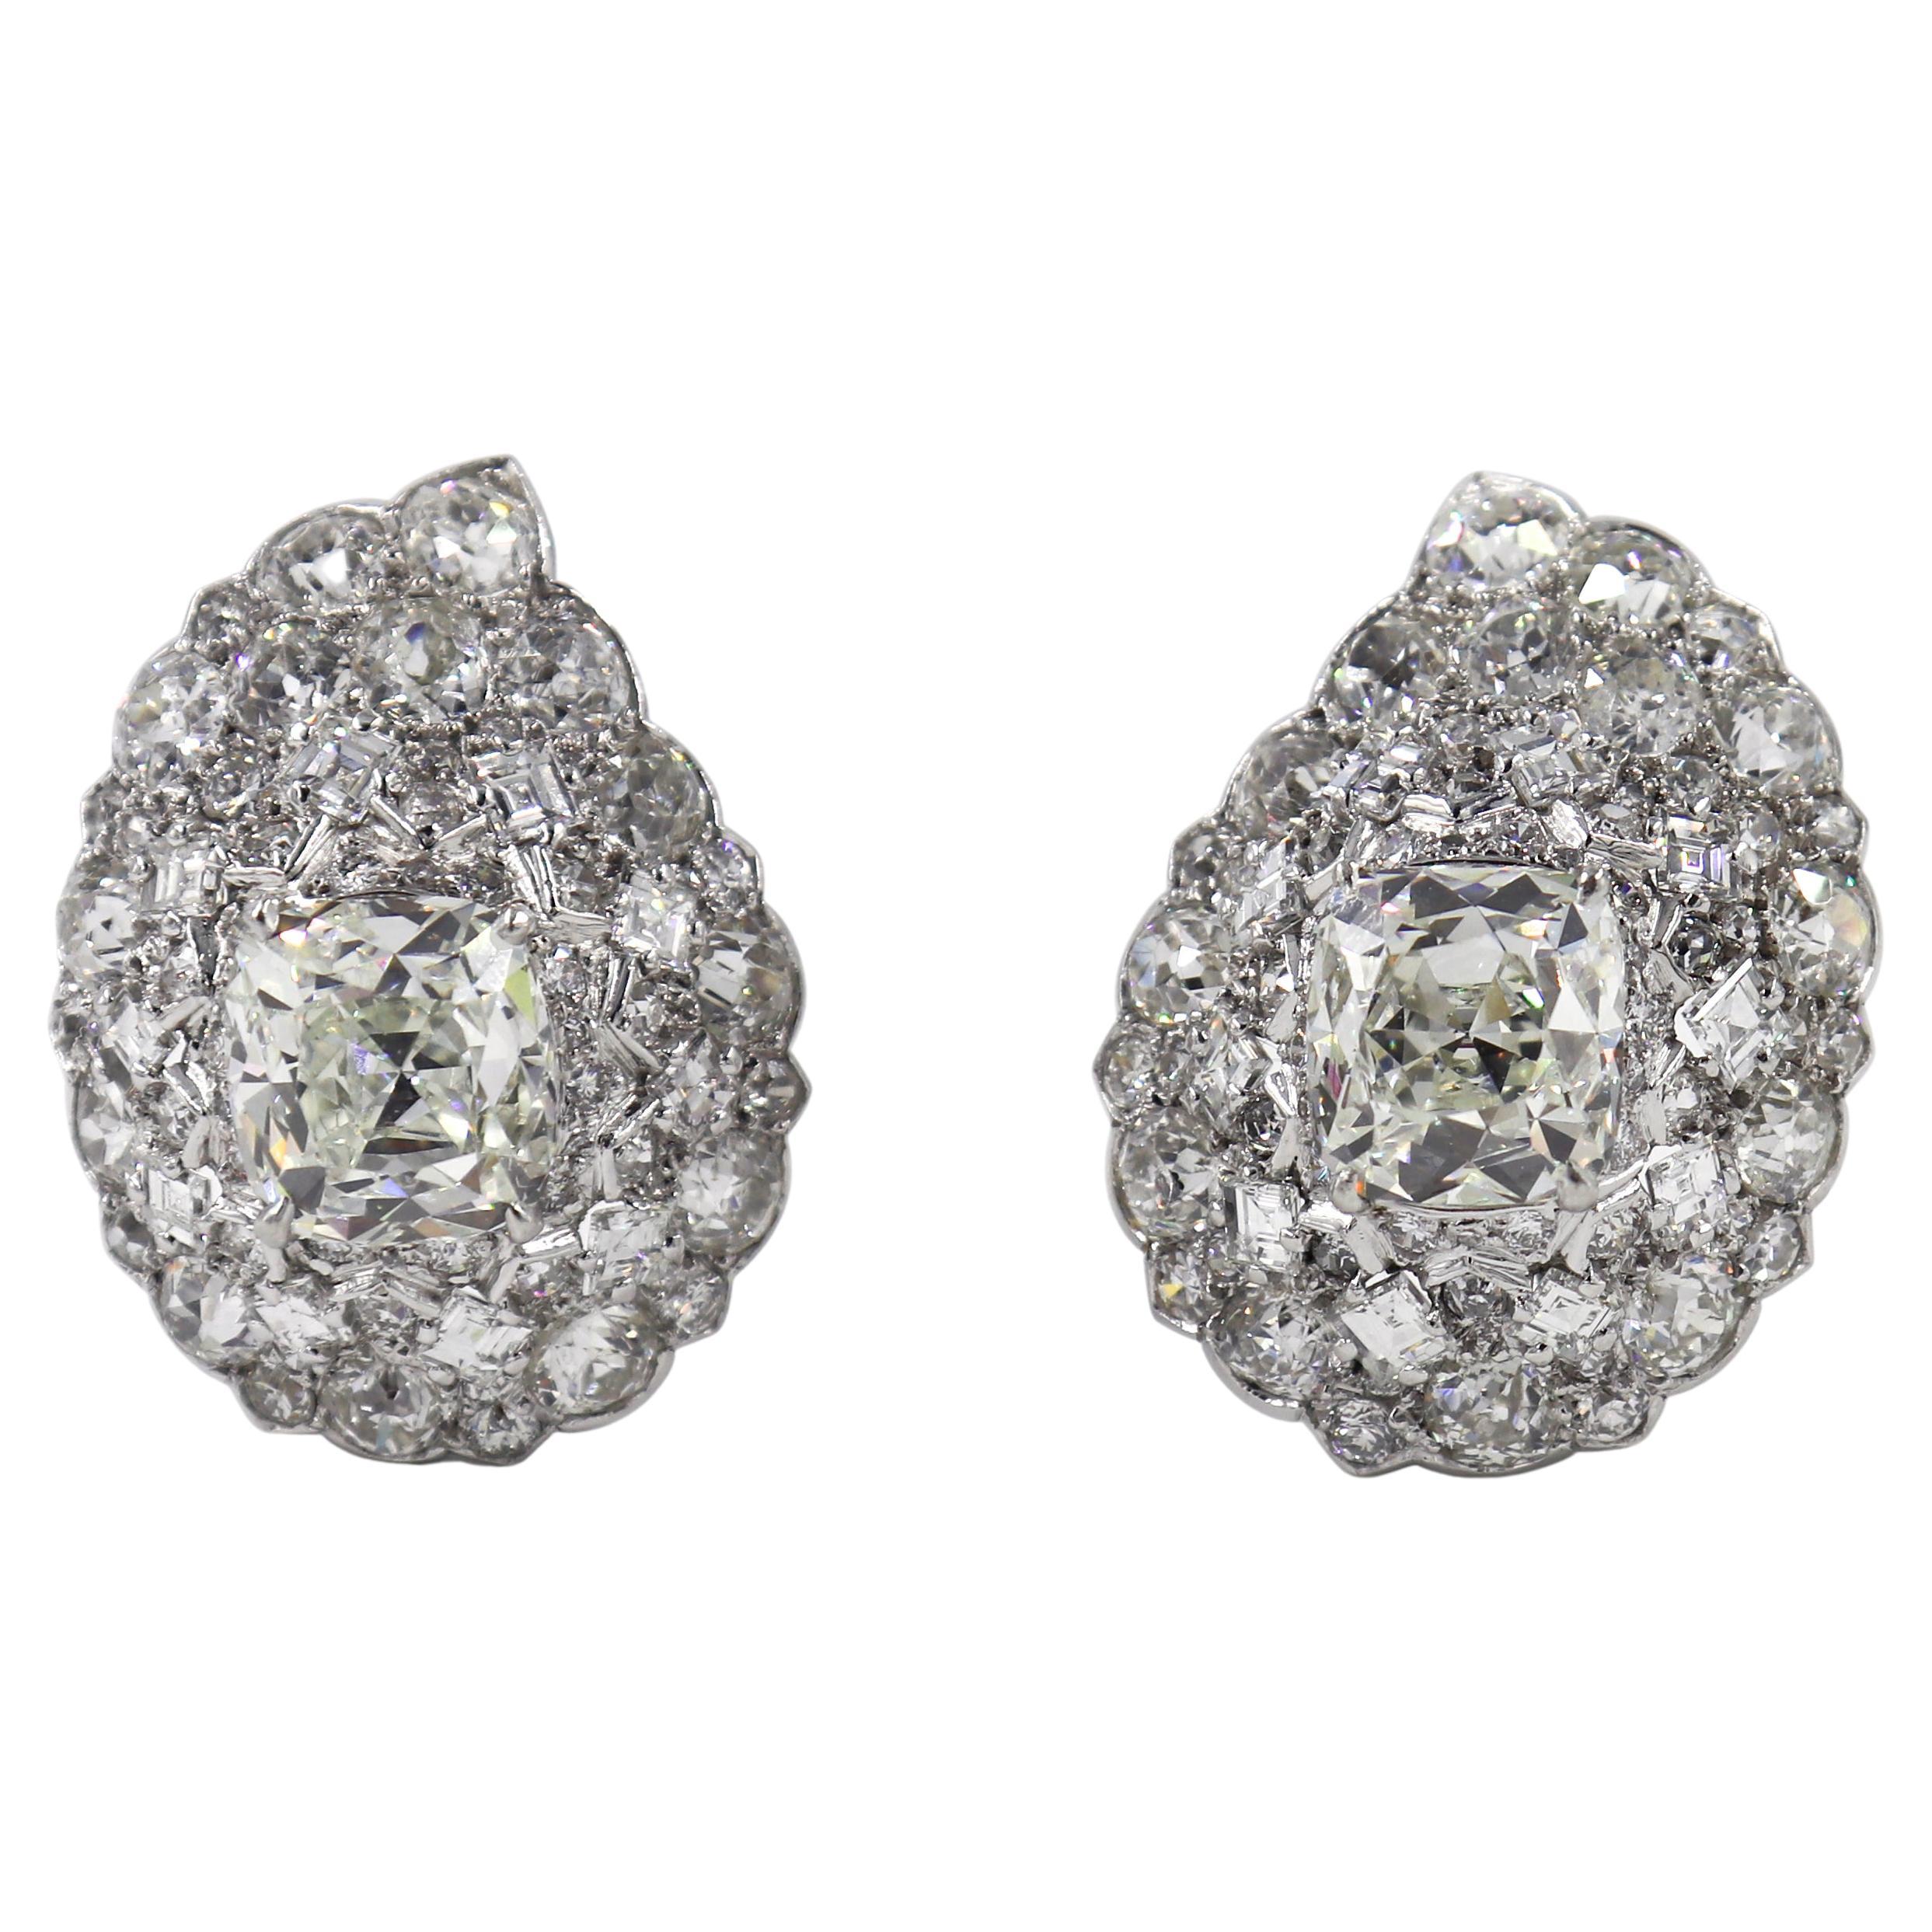 Exceptional Cartier Art Deco Cushion cuts diamond earrings app. 5 ct each For Sale